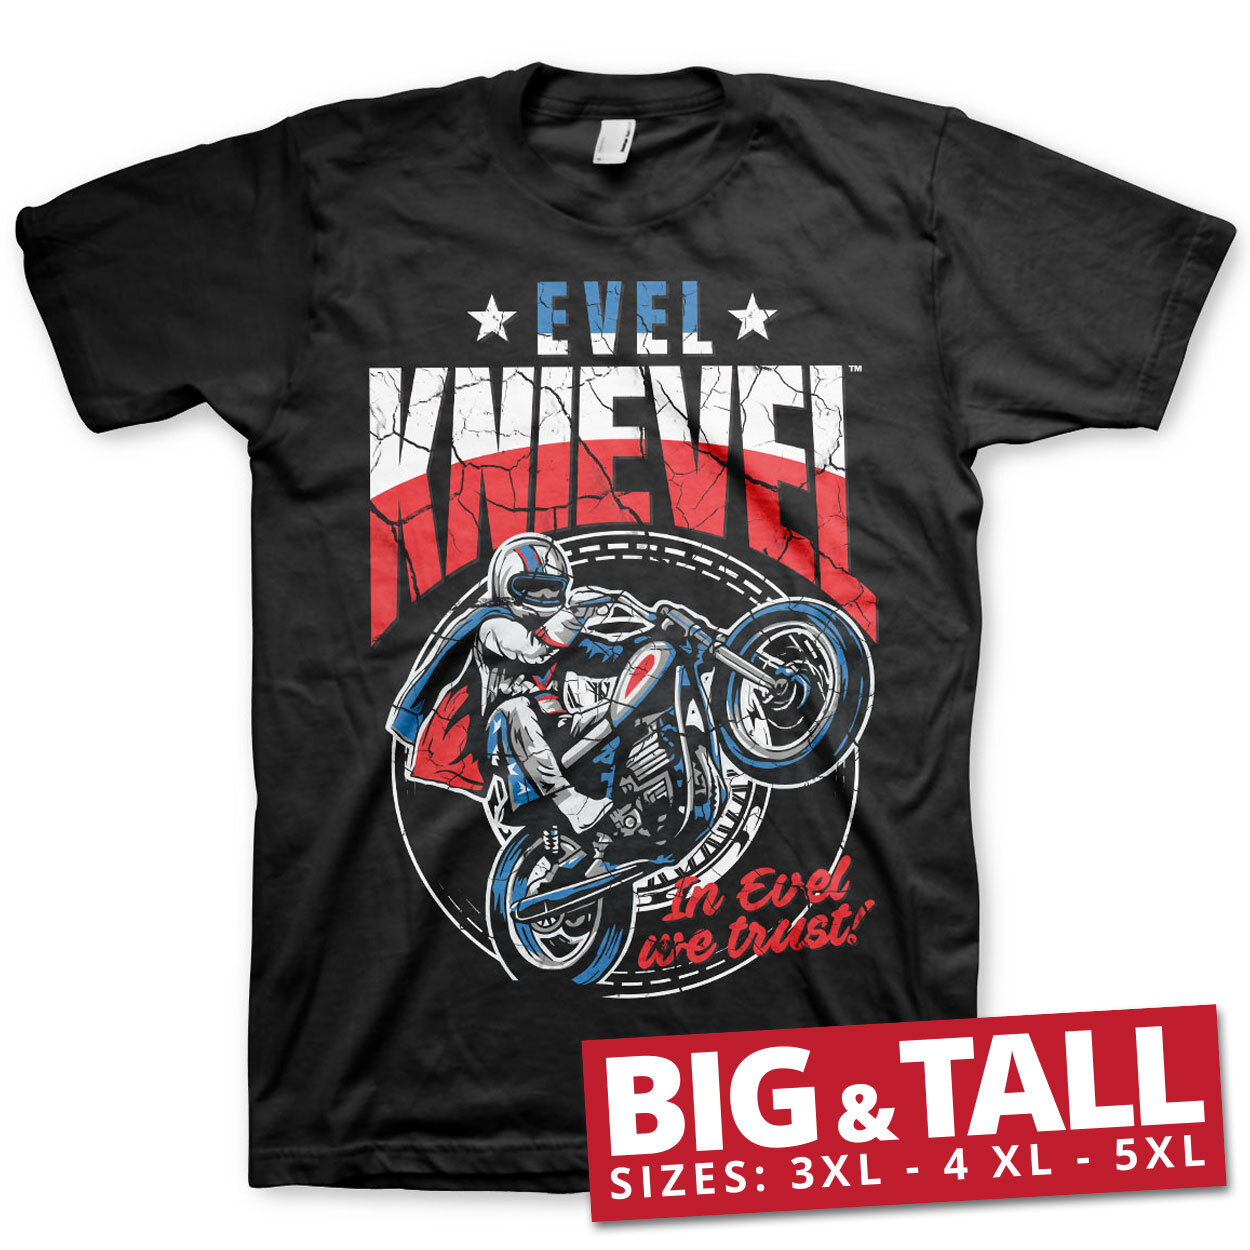 Evel Knievel Wheelie Big & Tall T-Shirt